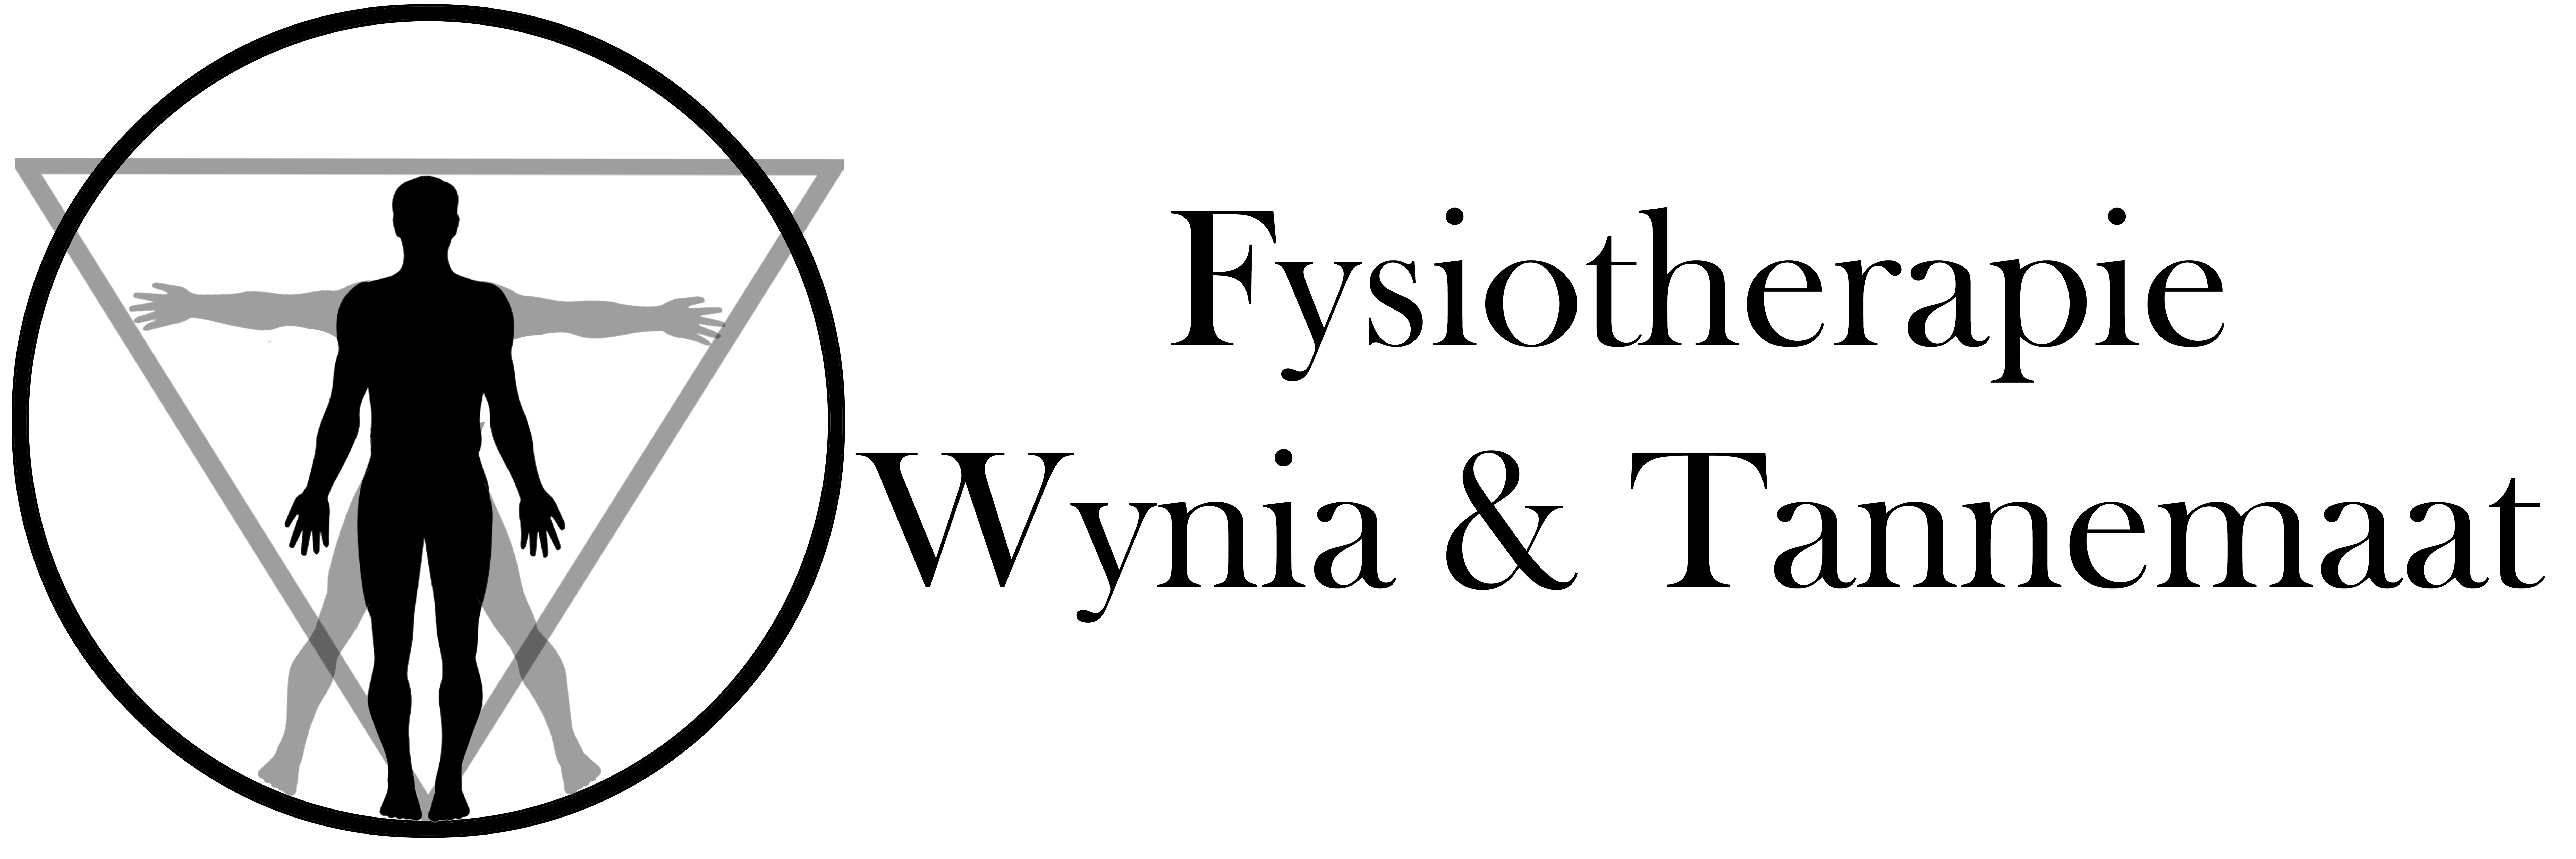 Fysiotherapie Wynia & Tannemaat